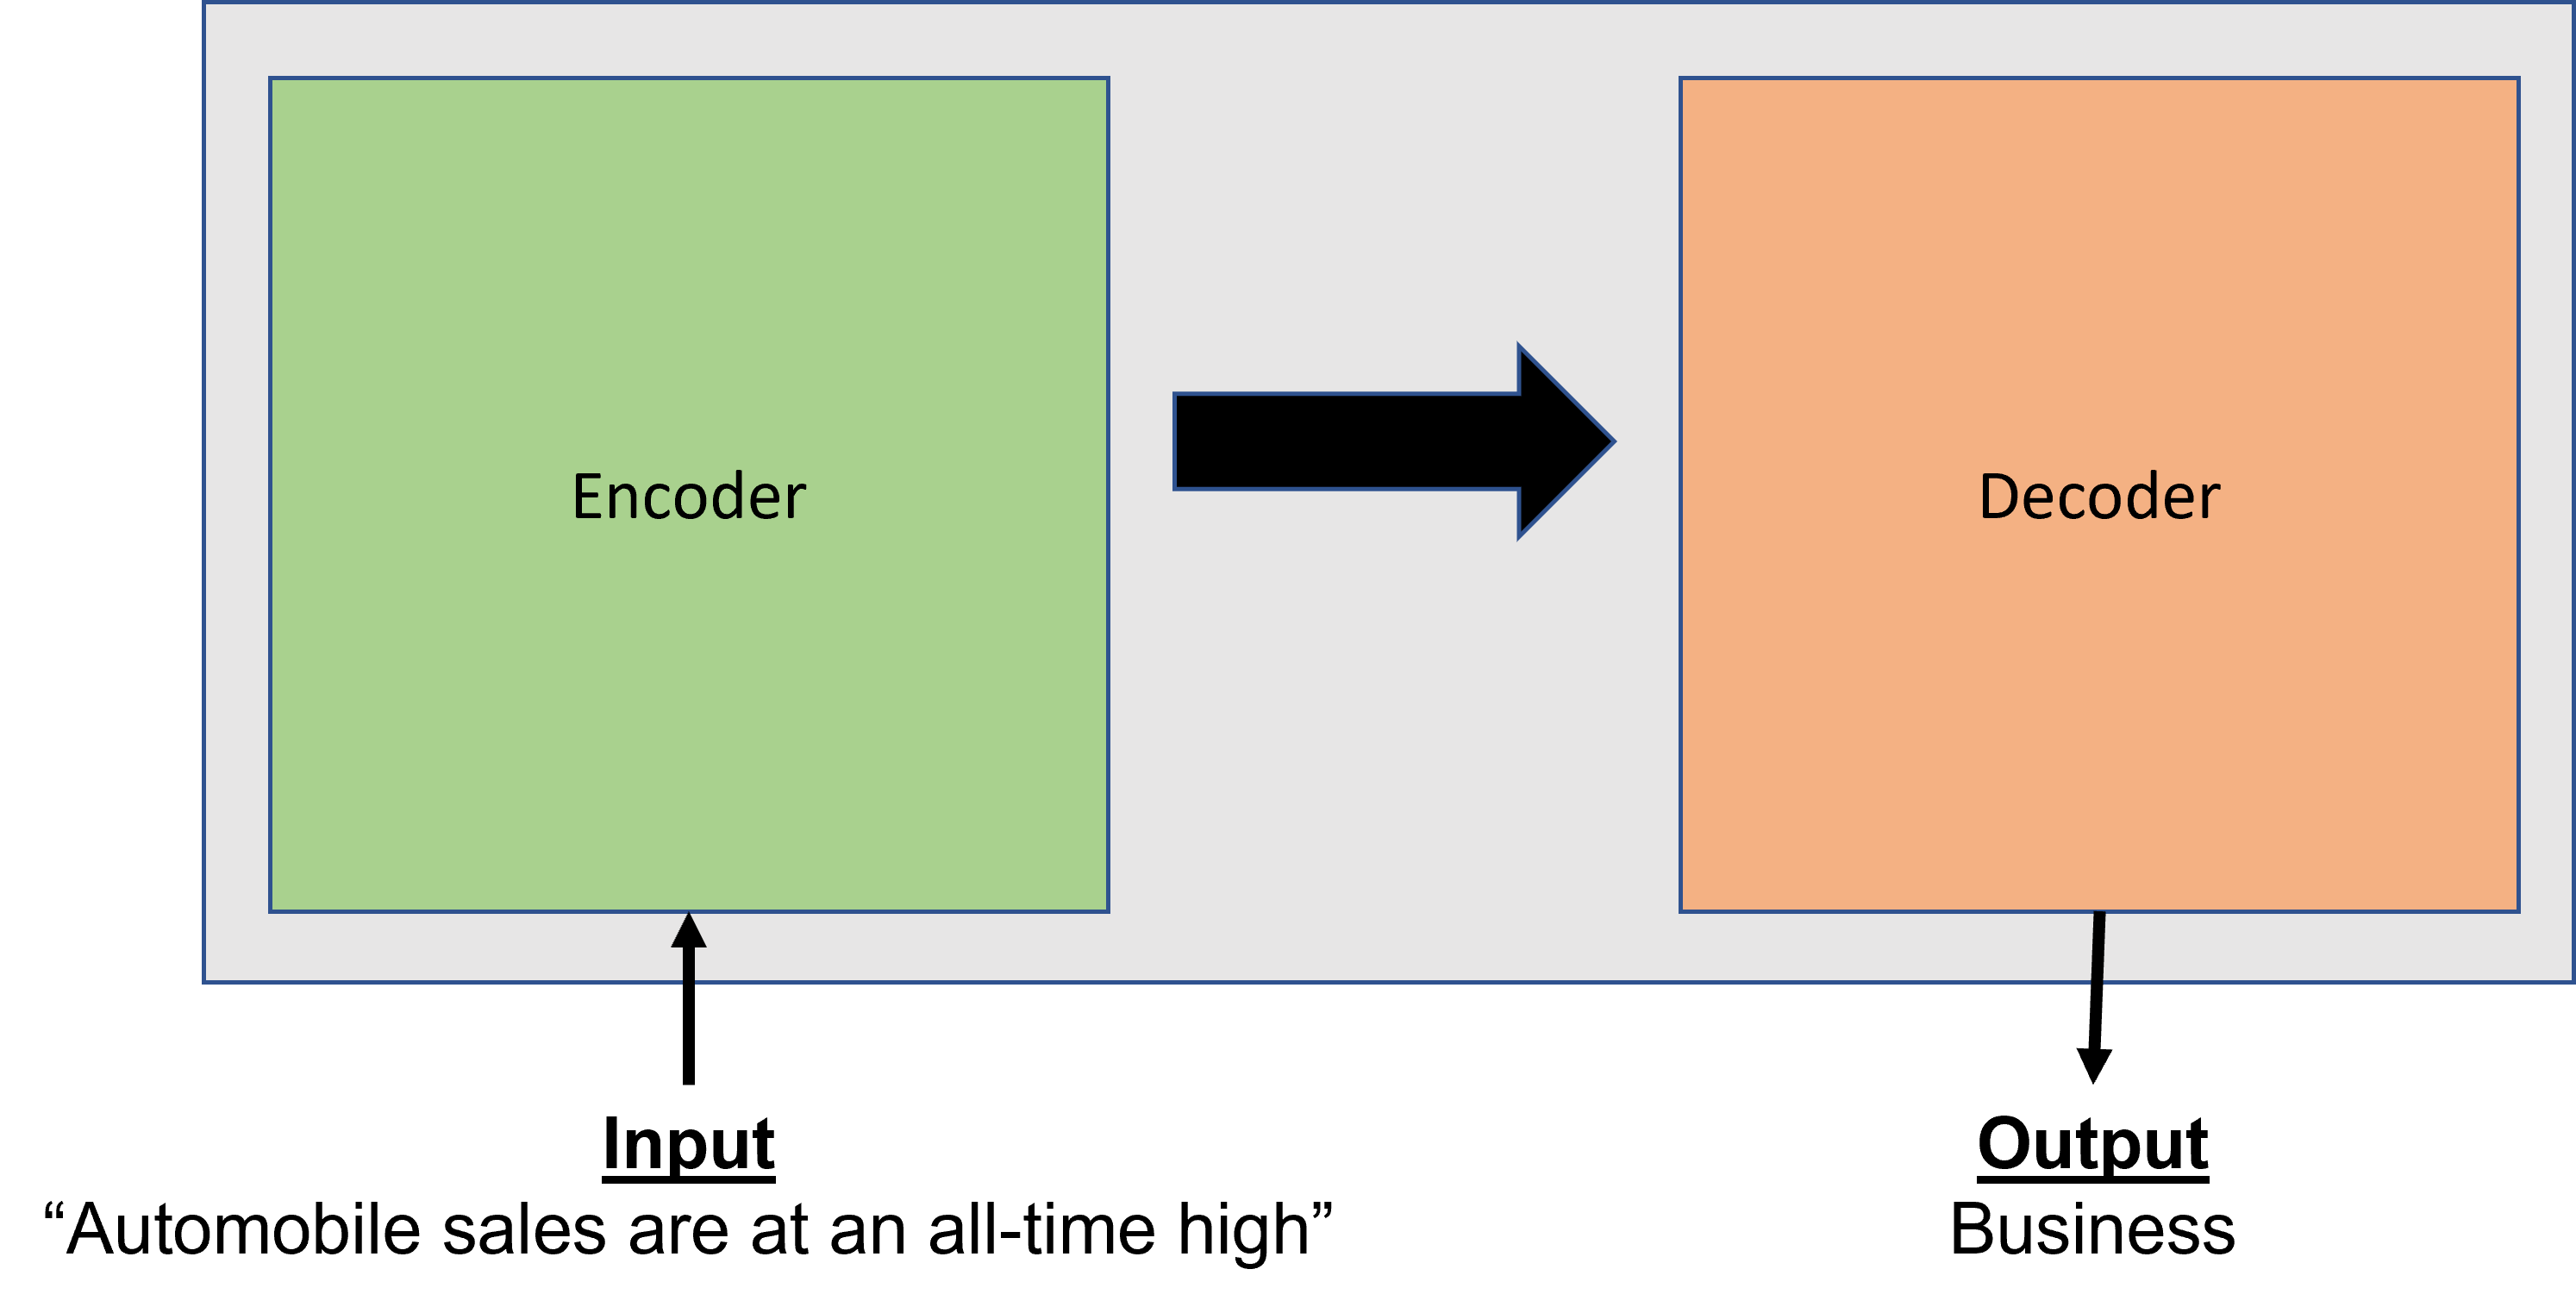 High-level transformer network architecture